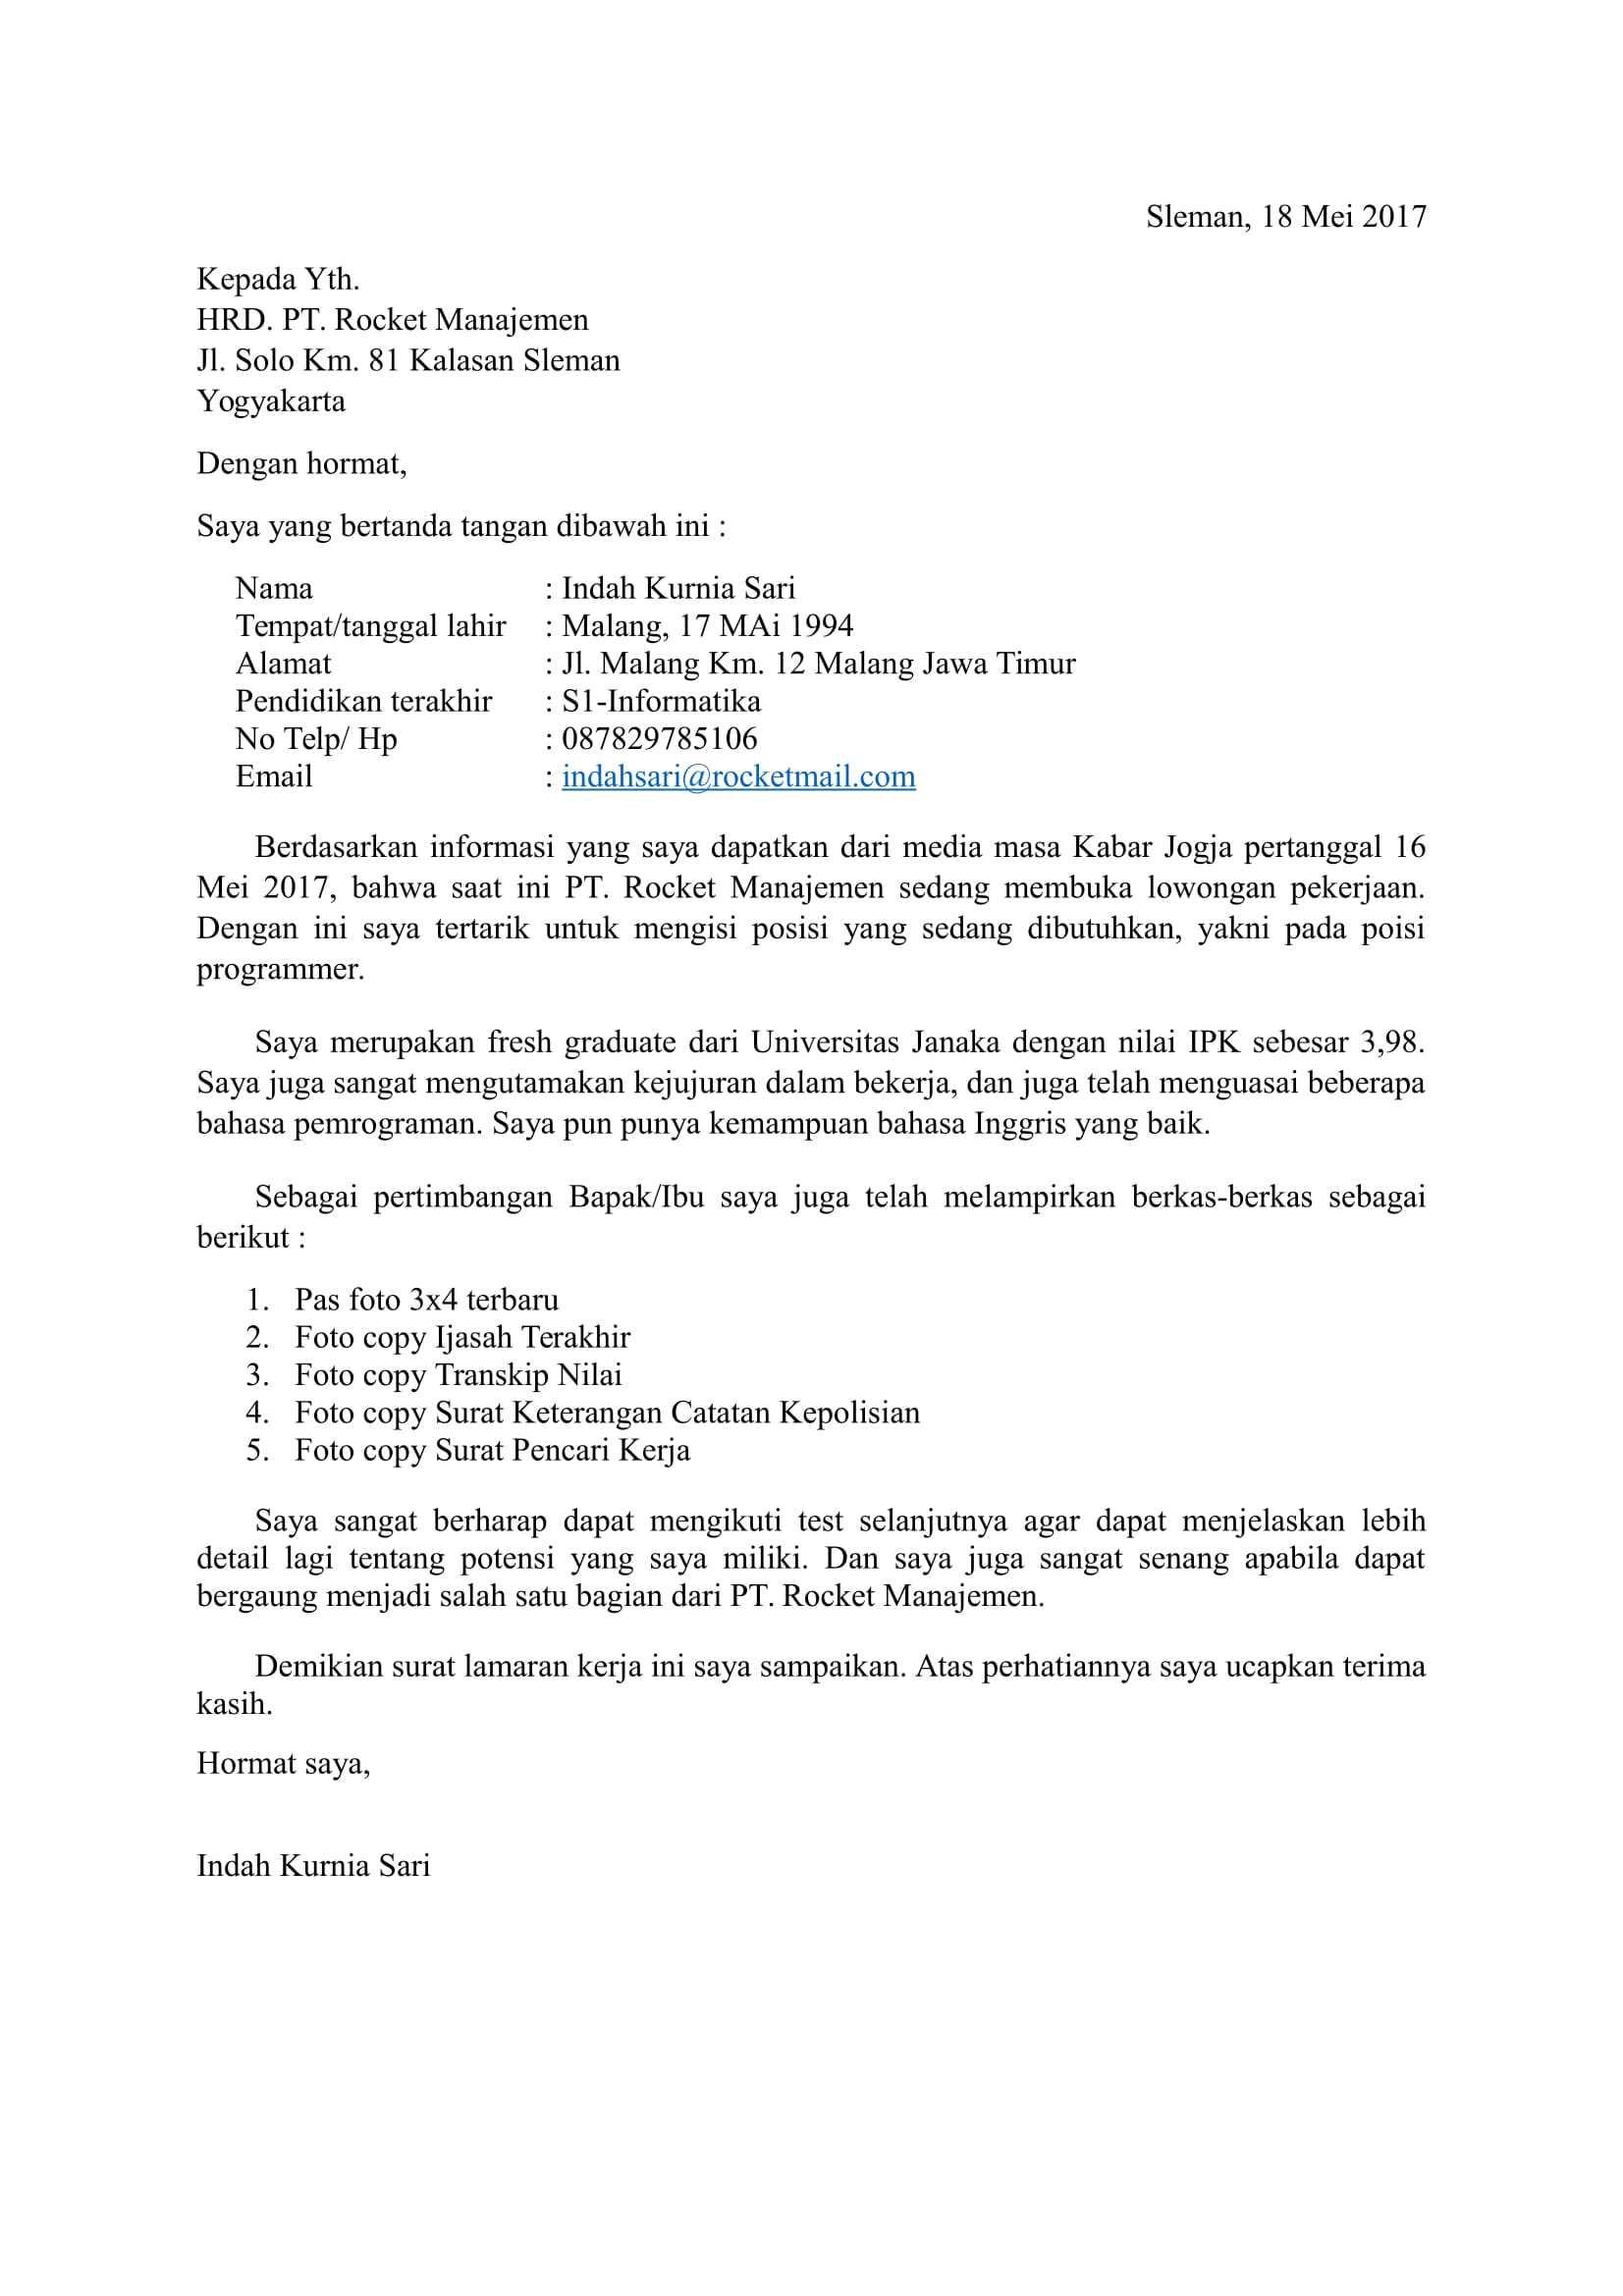 Contoh Surat Lamaran Kerja Yang Baik Dan Benar Perusahaan Jakarta